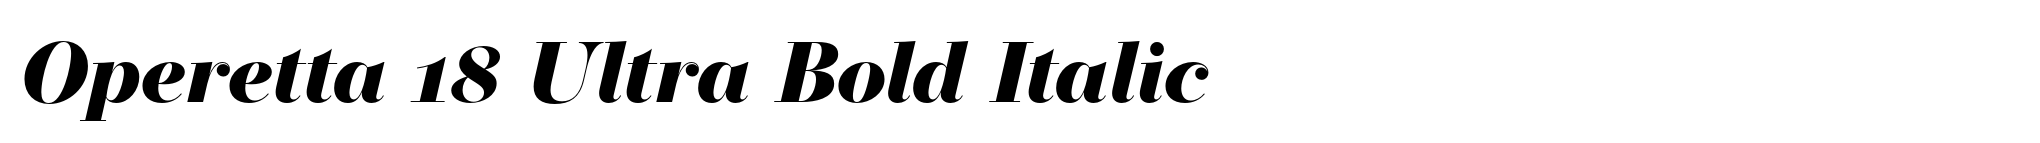 Operetta 18 Ultra Bold Italic image